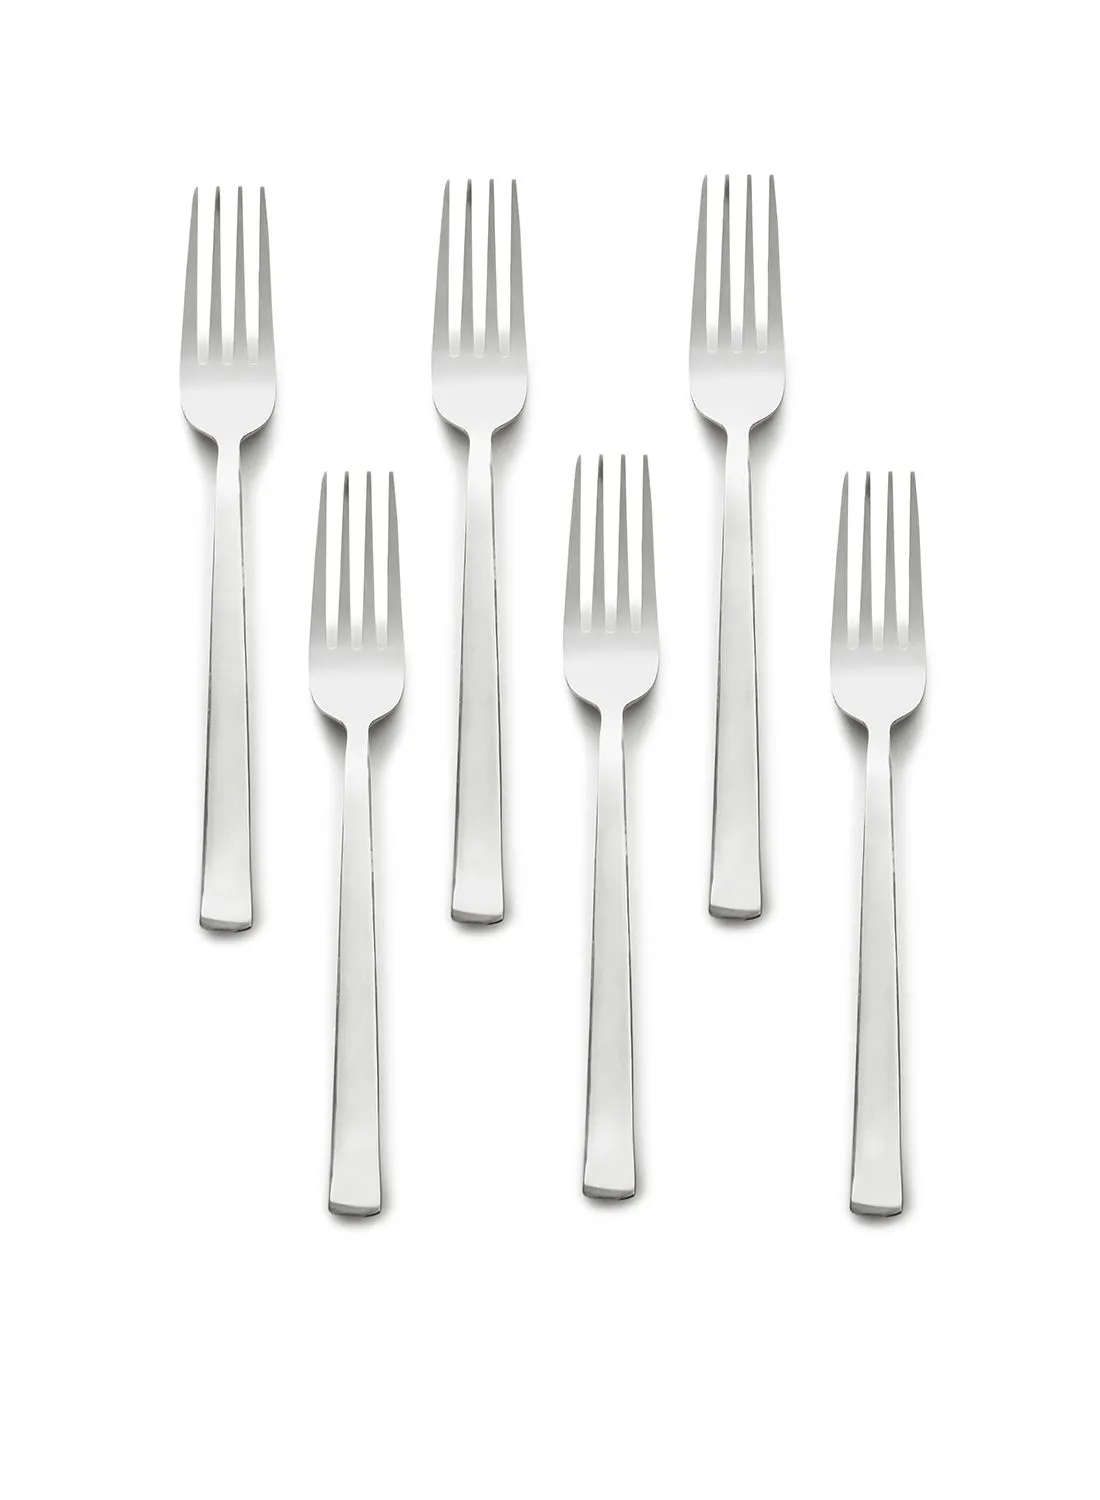 noon east 6 Piece Forks Set - Made Of Stainless Steel - Silverware Flatware - Fork Set - Serves 6 - Design Silver Spade